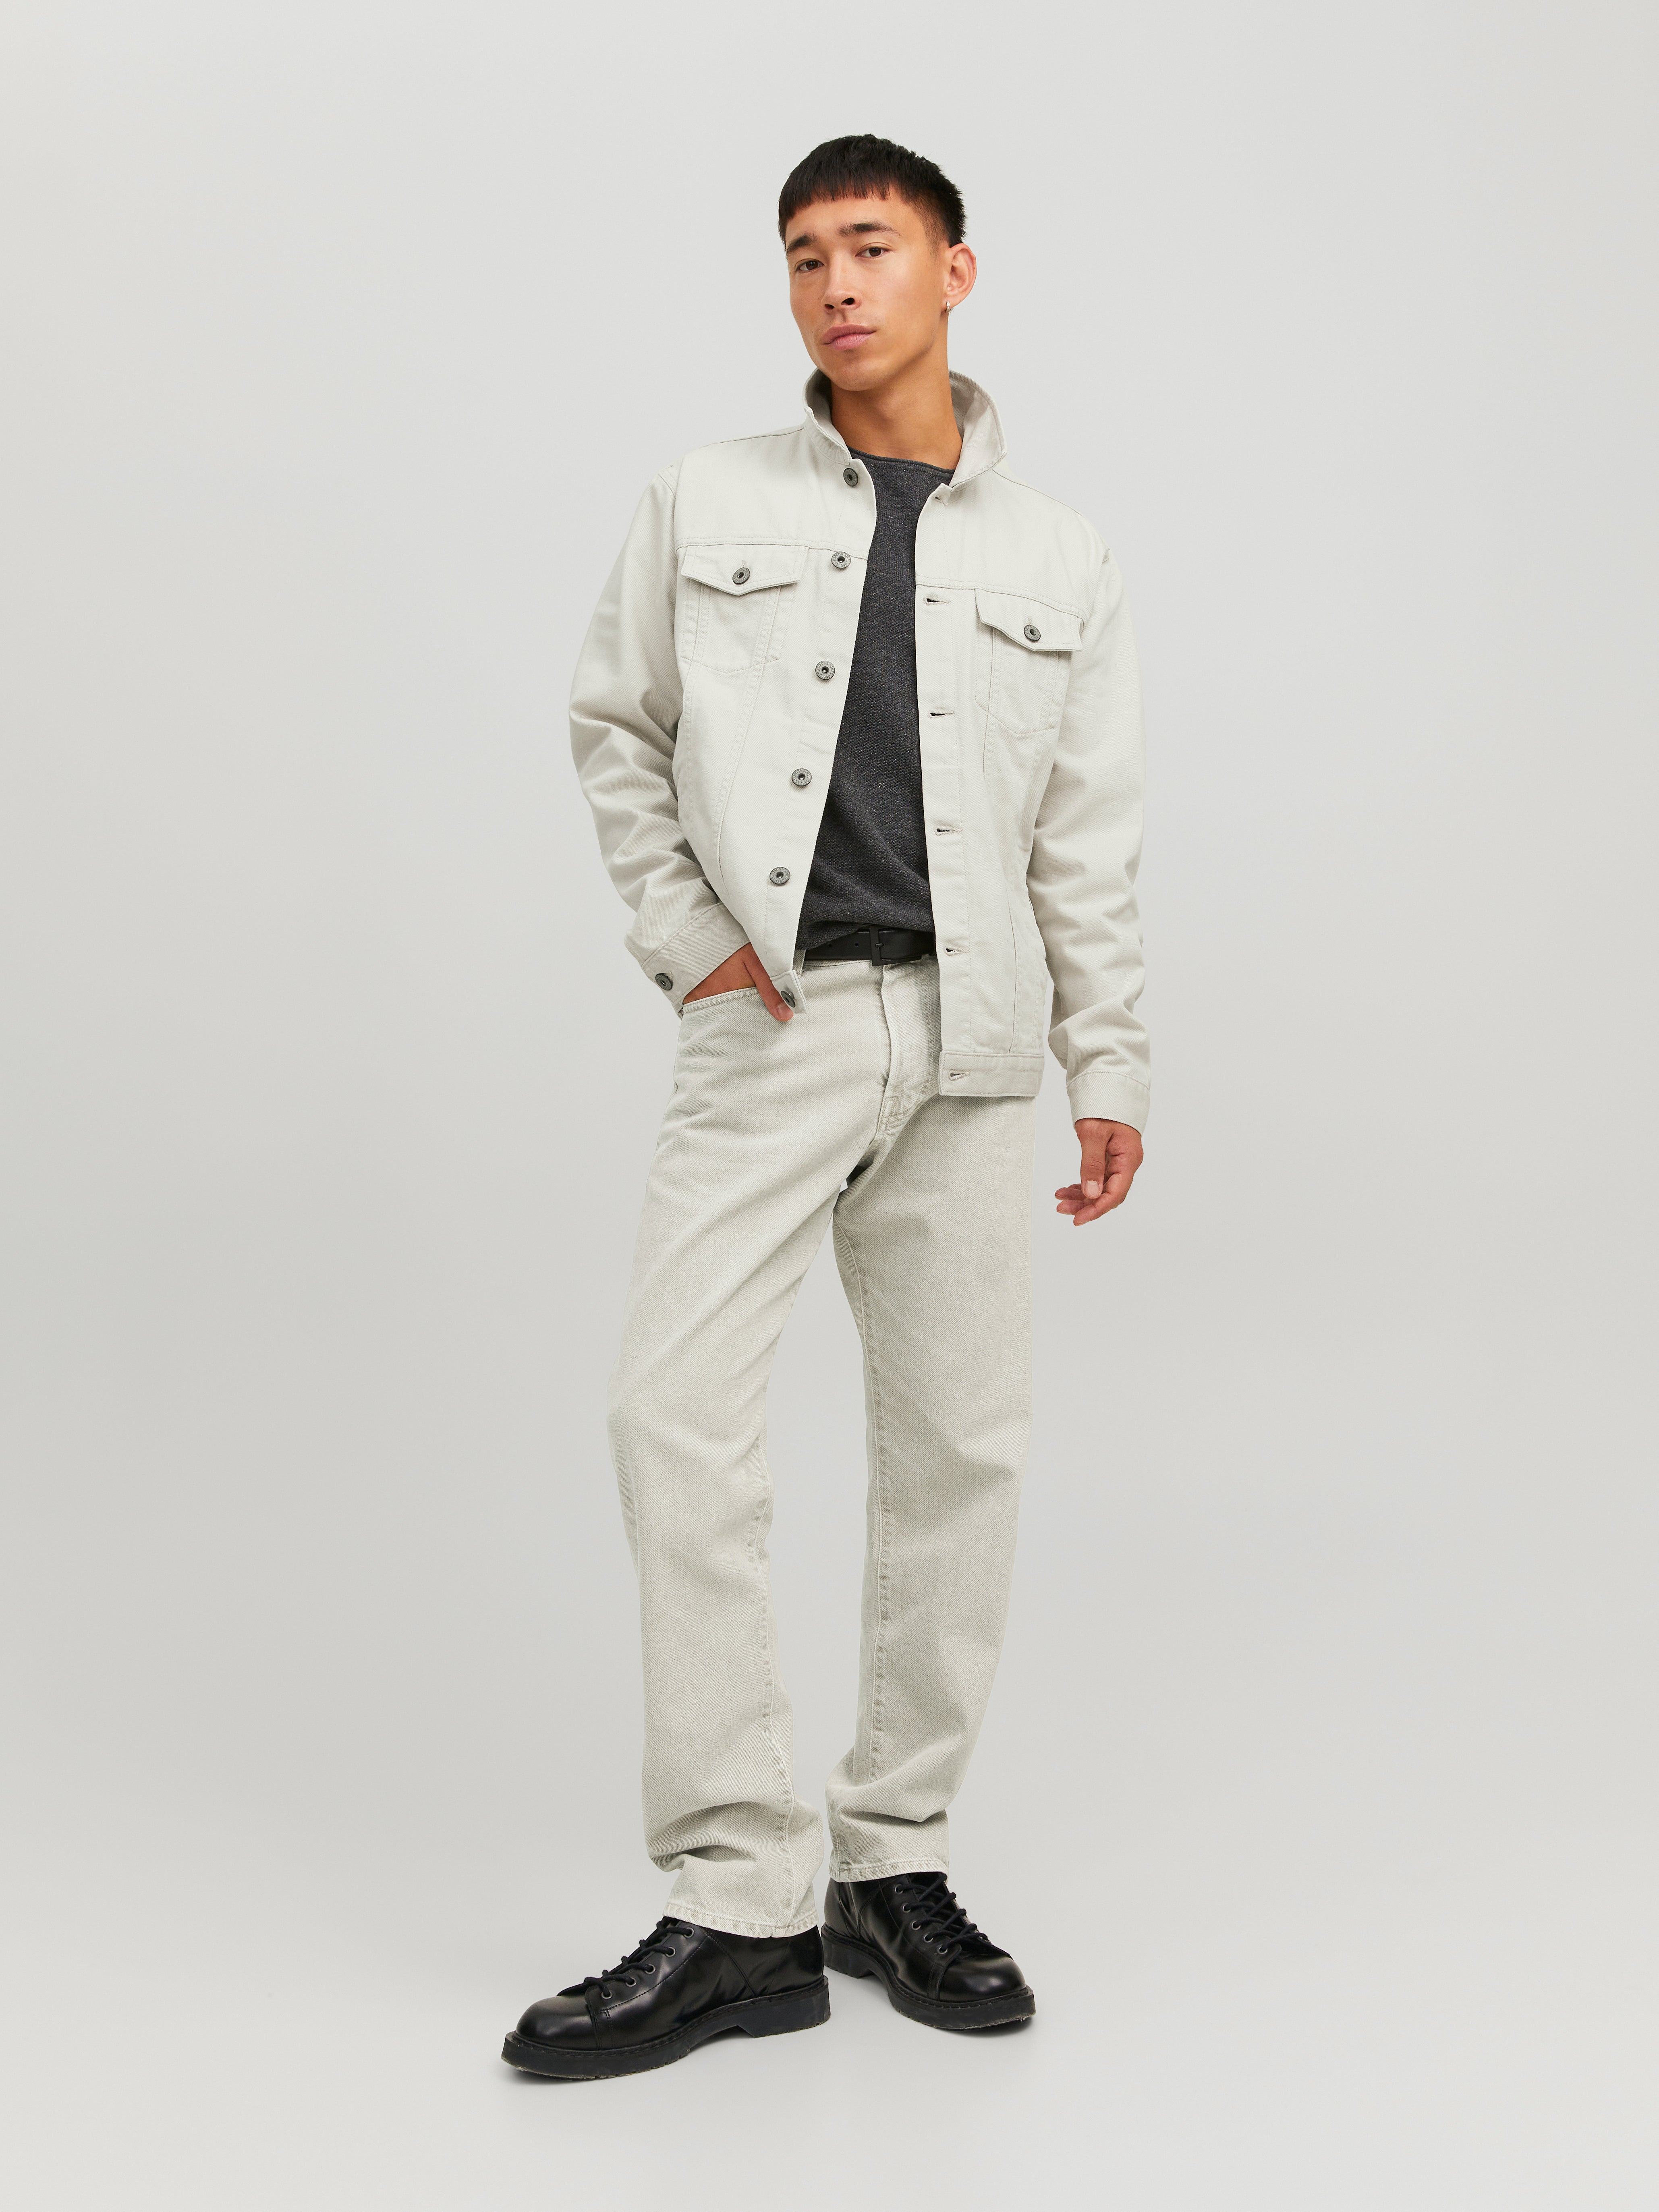 LONGBIDA Solid Color Men Jacket Jeans Slim Fit Coat Military Fashion